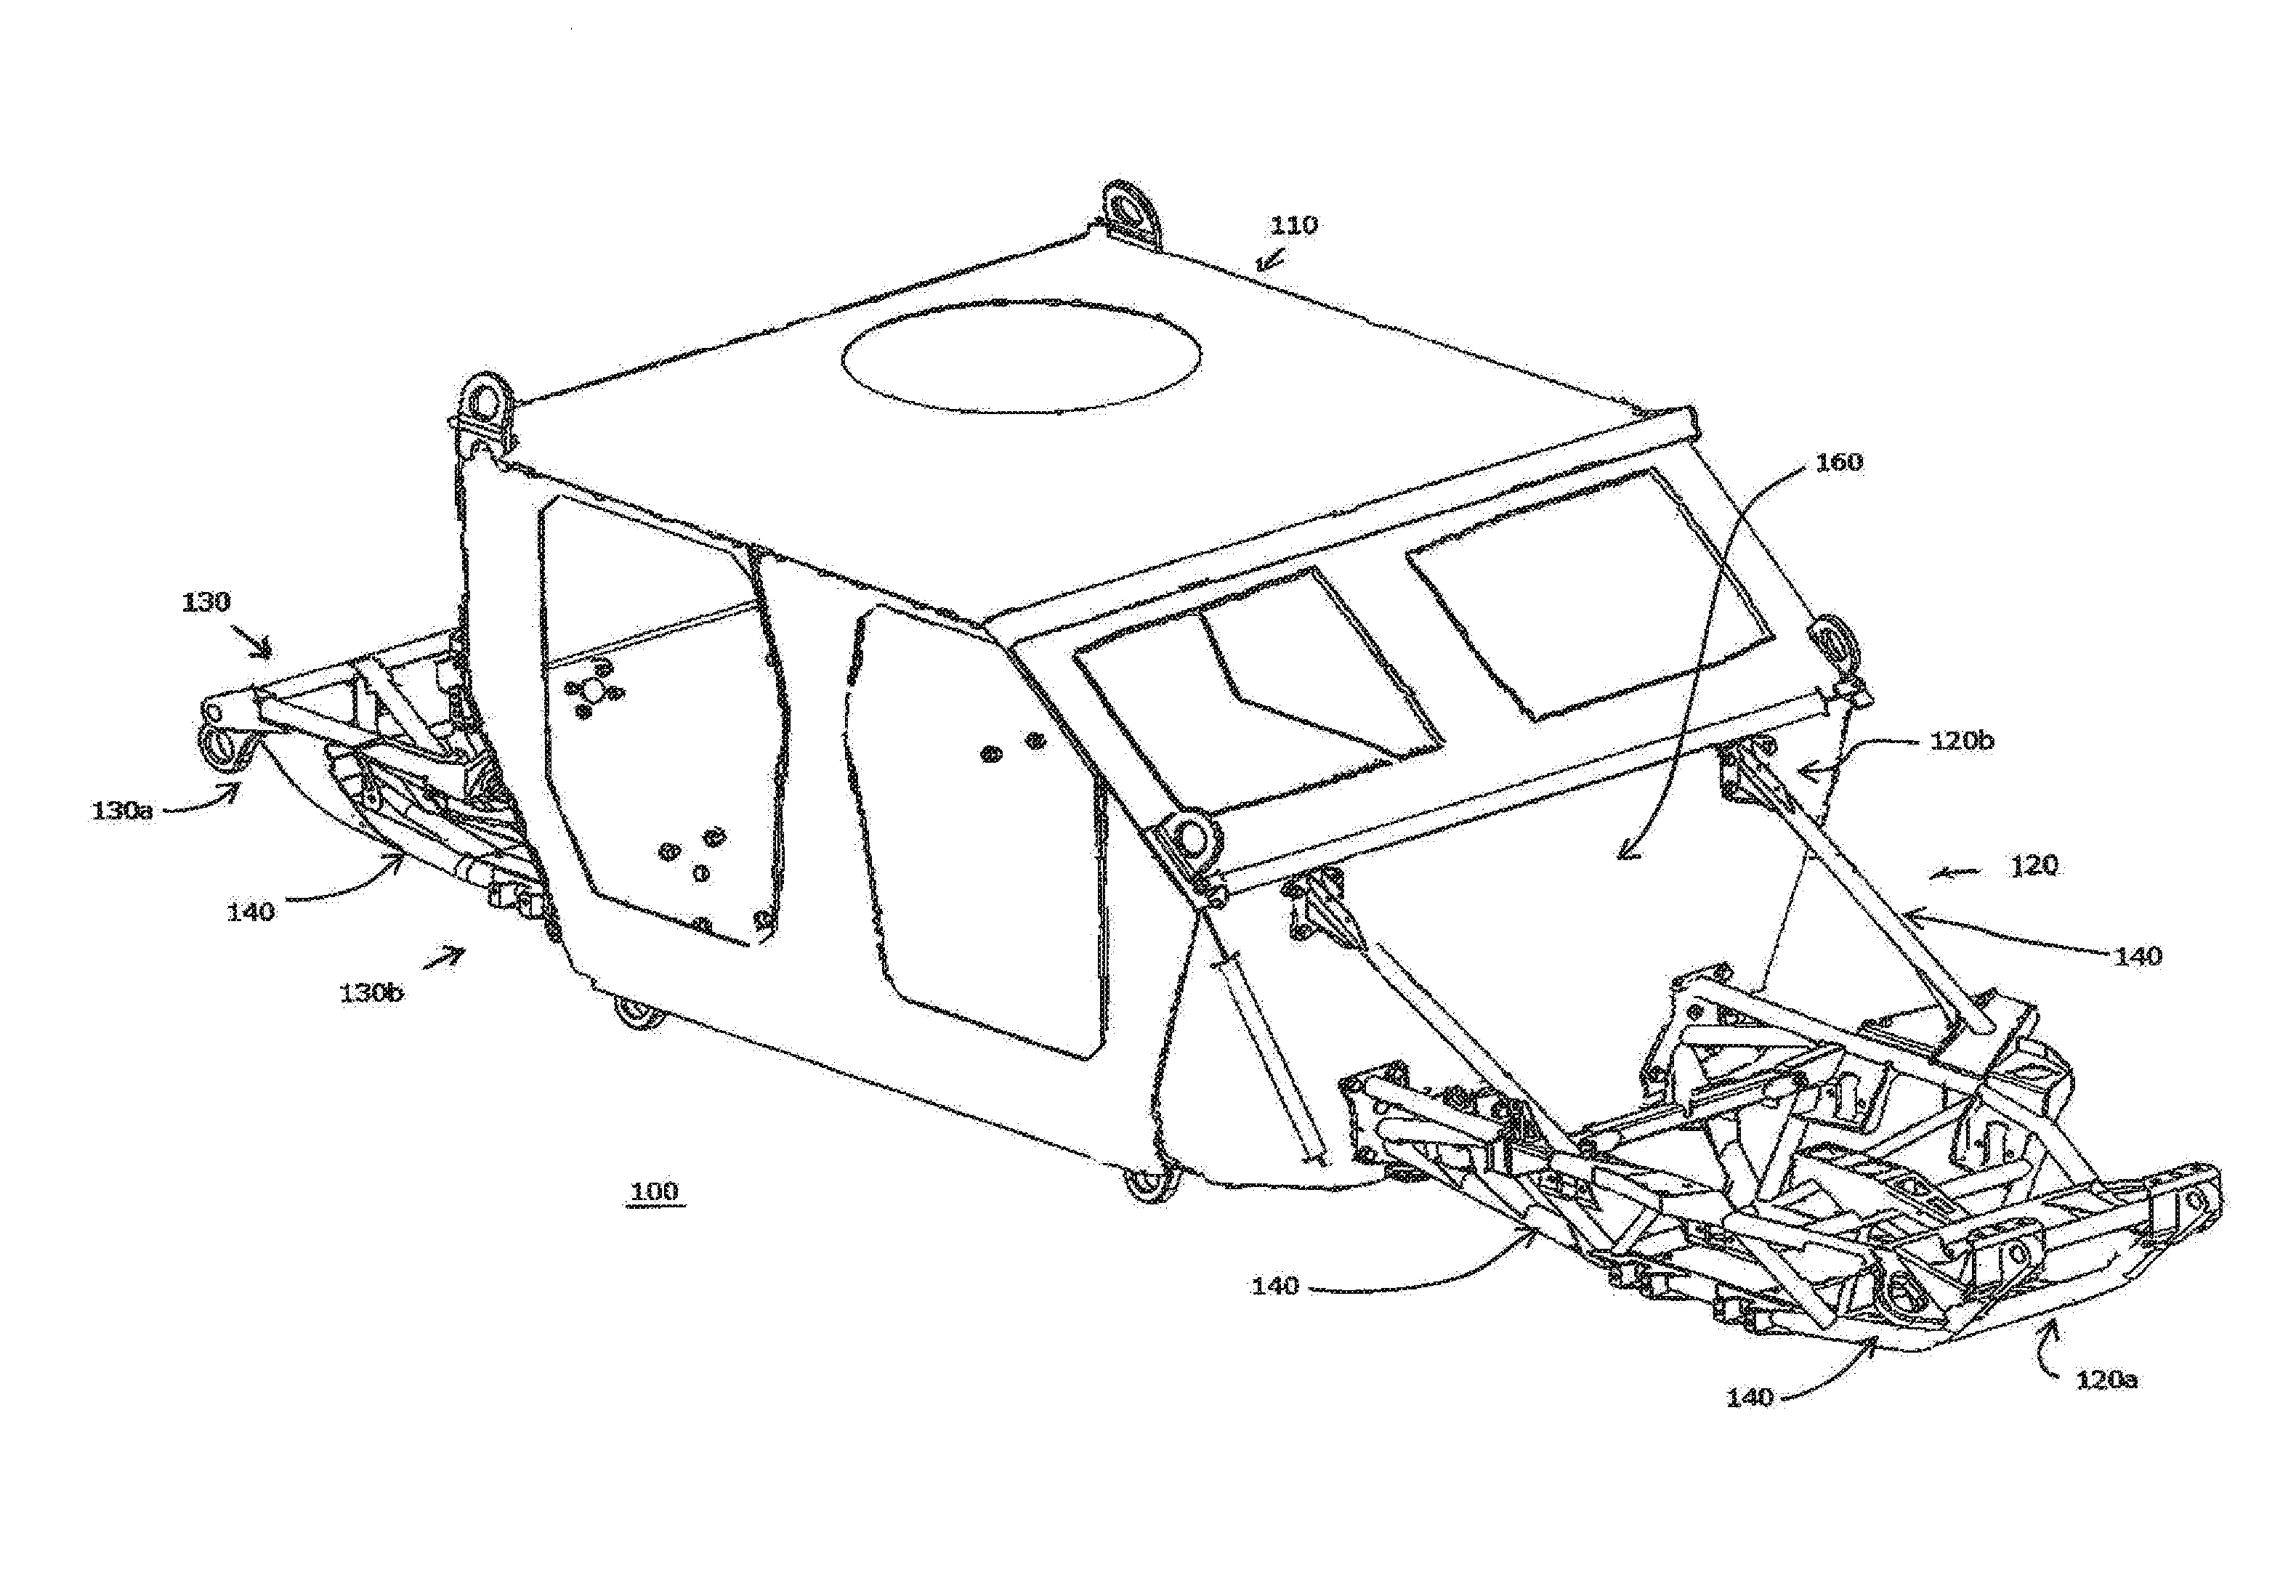 Modular Vehicle Architecture